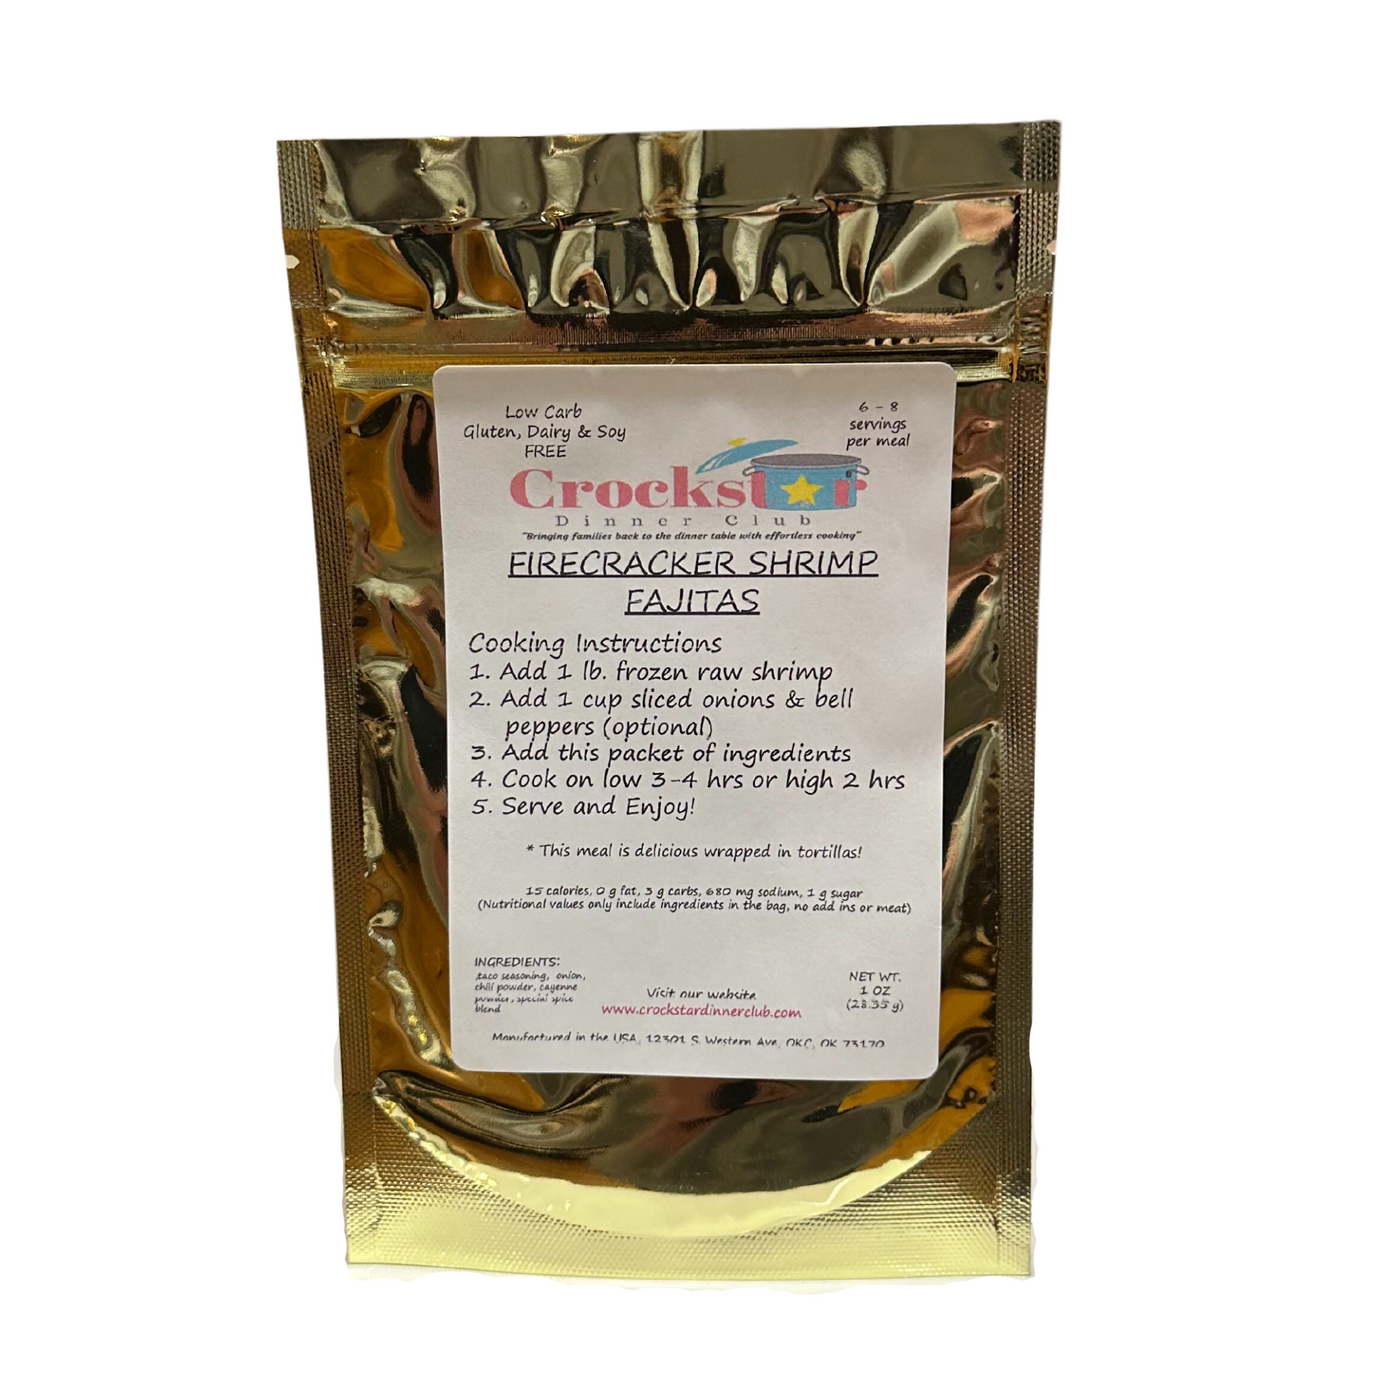 Crockstar Firecracker Shrimp Fajitas